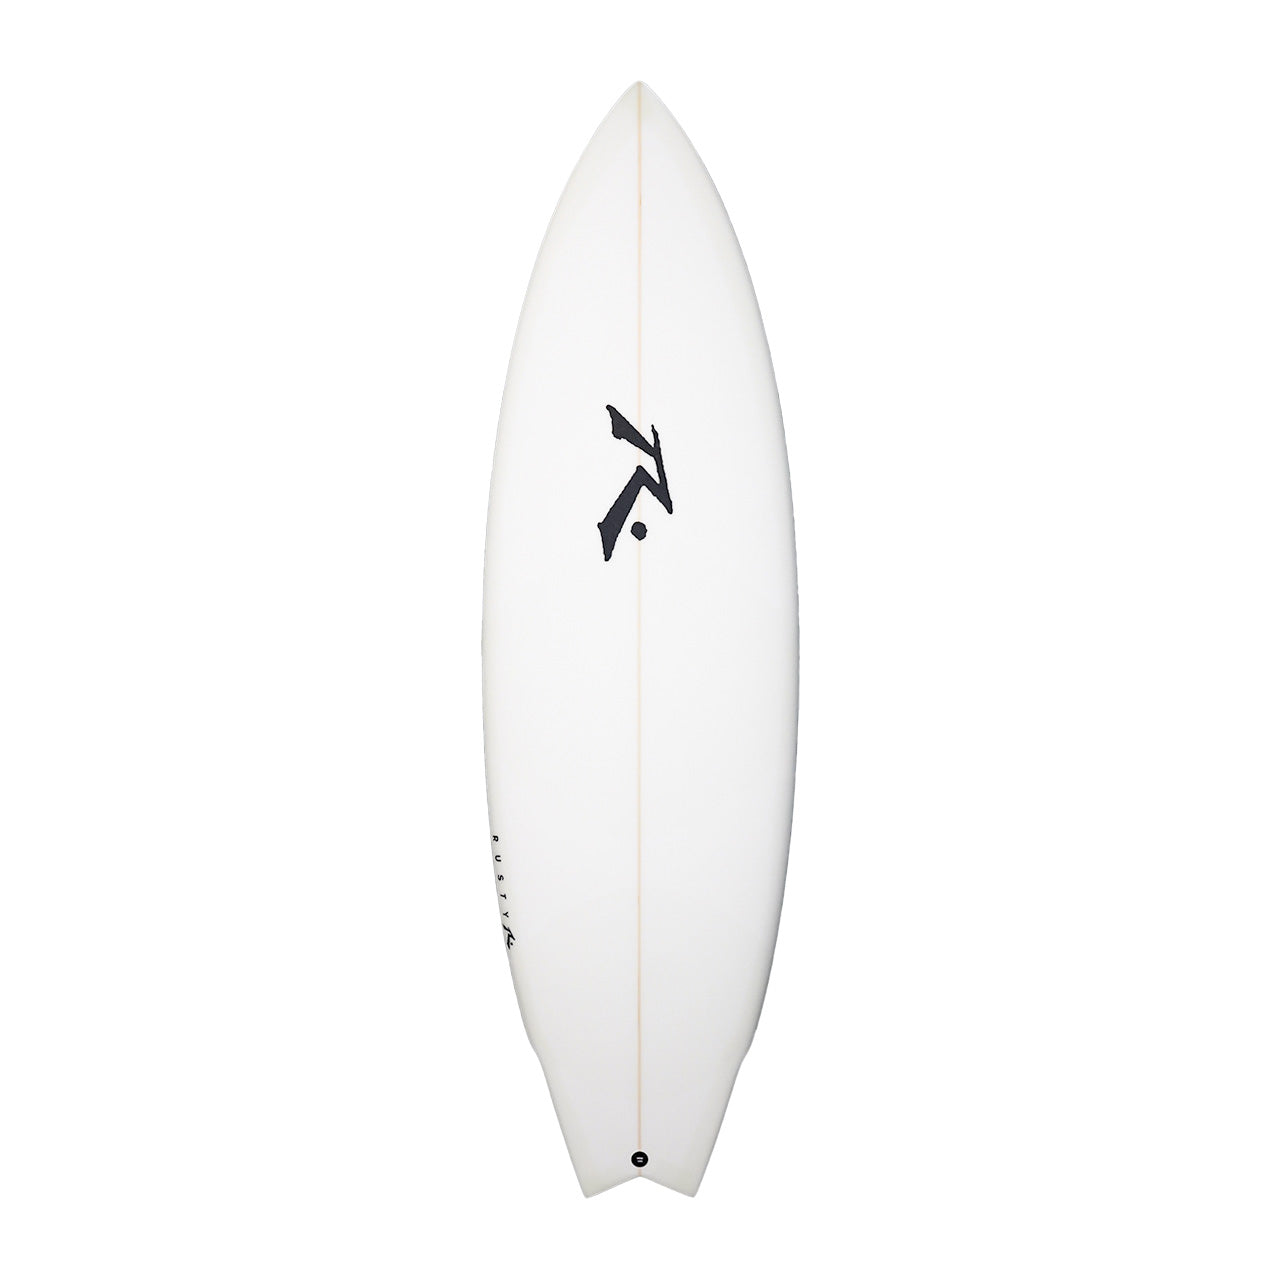 The Deuce Performance Twin Fin Surfboard - Rusty Surfboards + Noel Salas Collaboration - Deck View